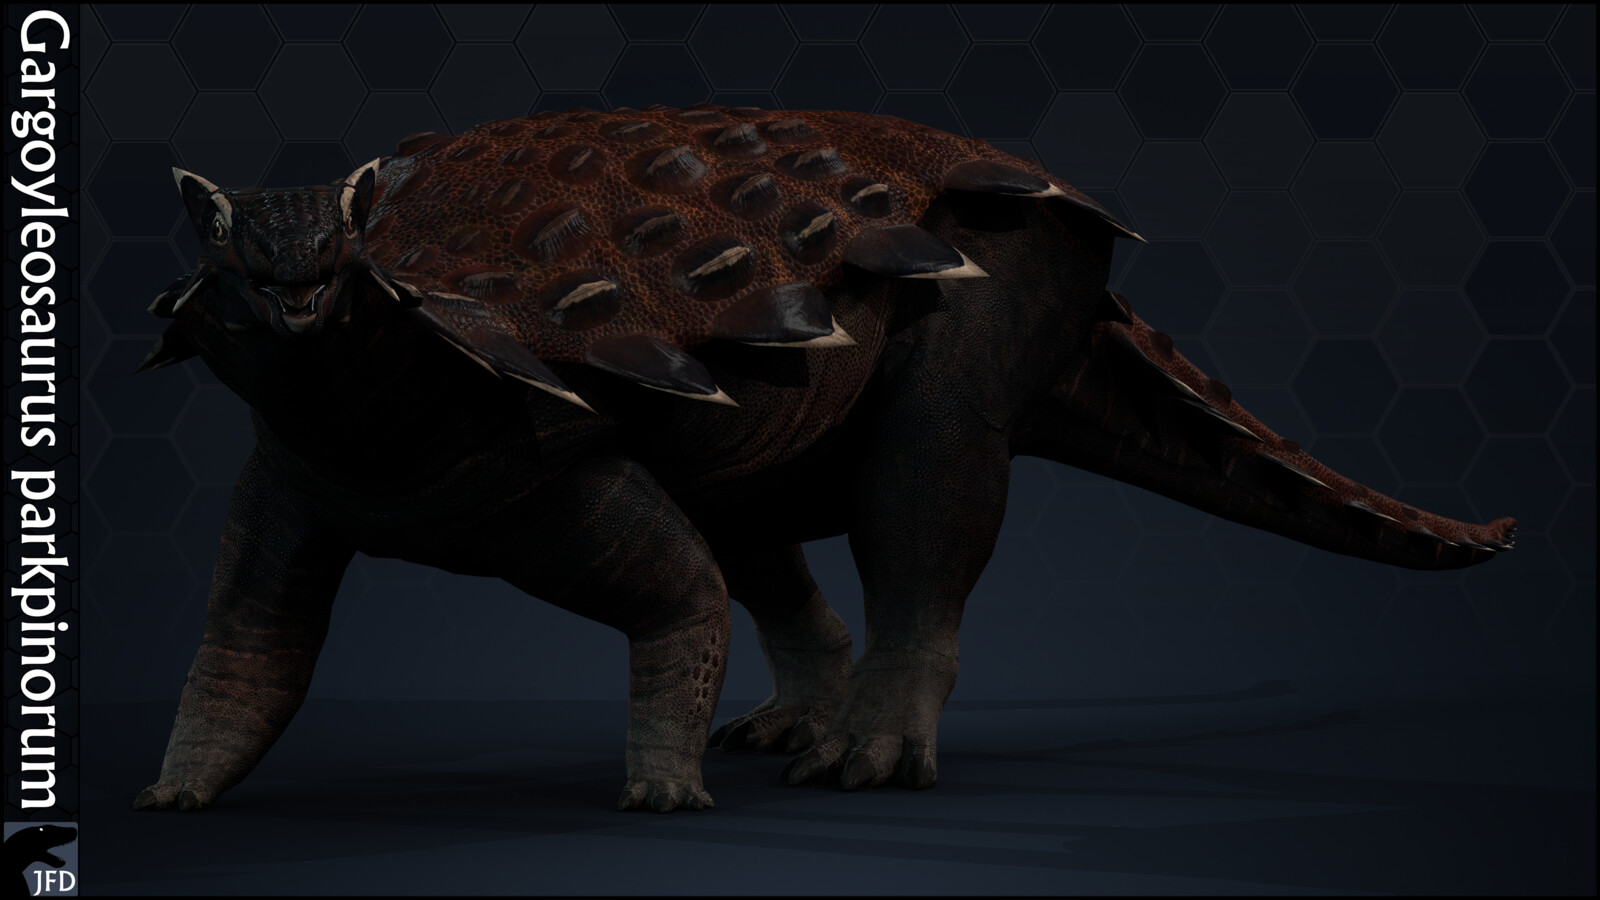 Gargoyleosaurus parkpinorum full body render.